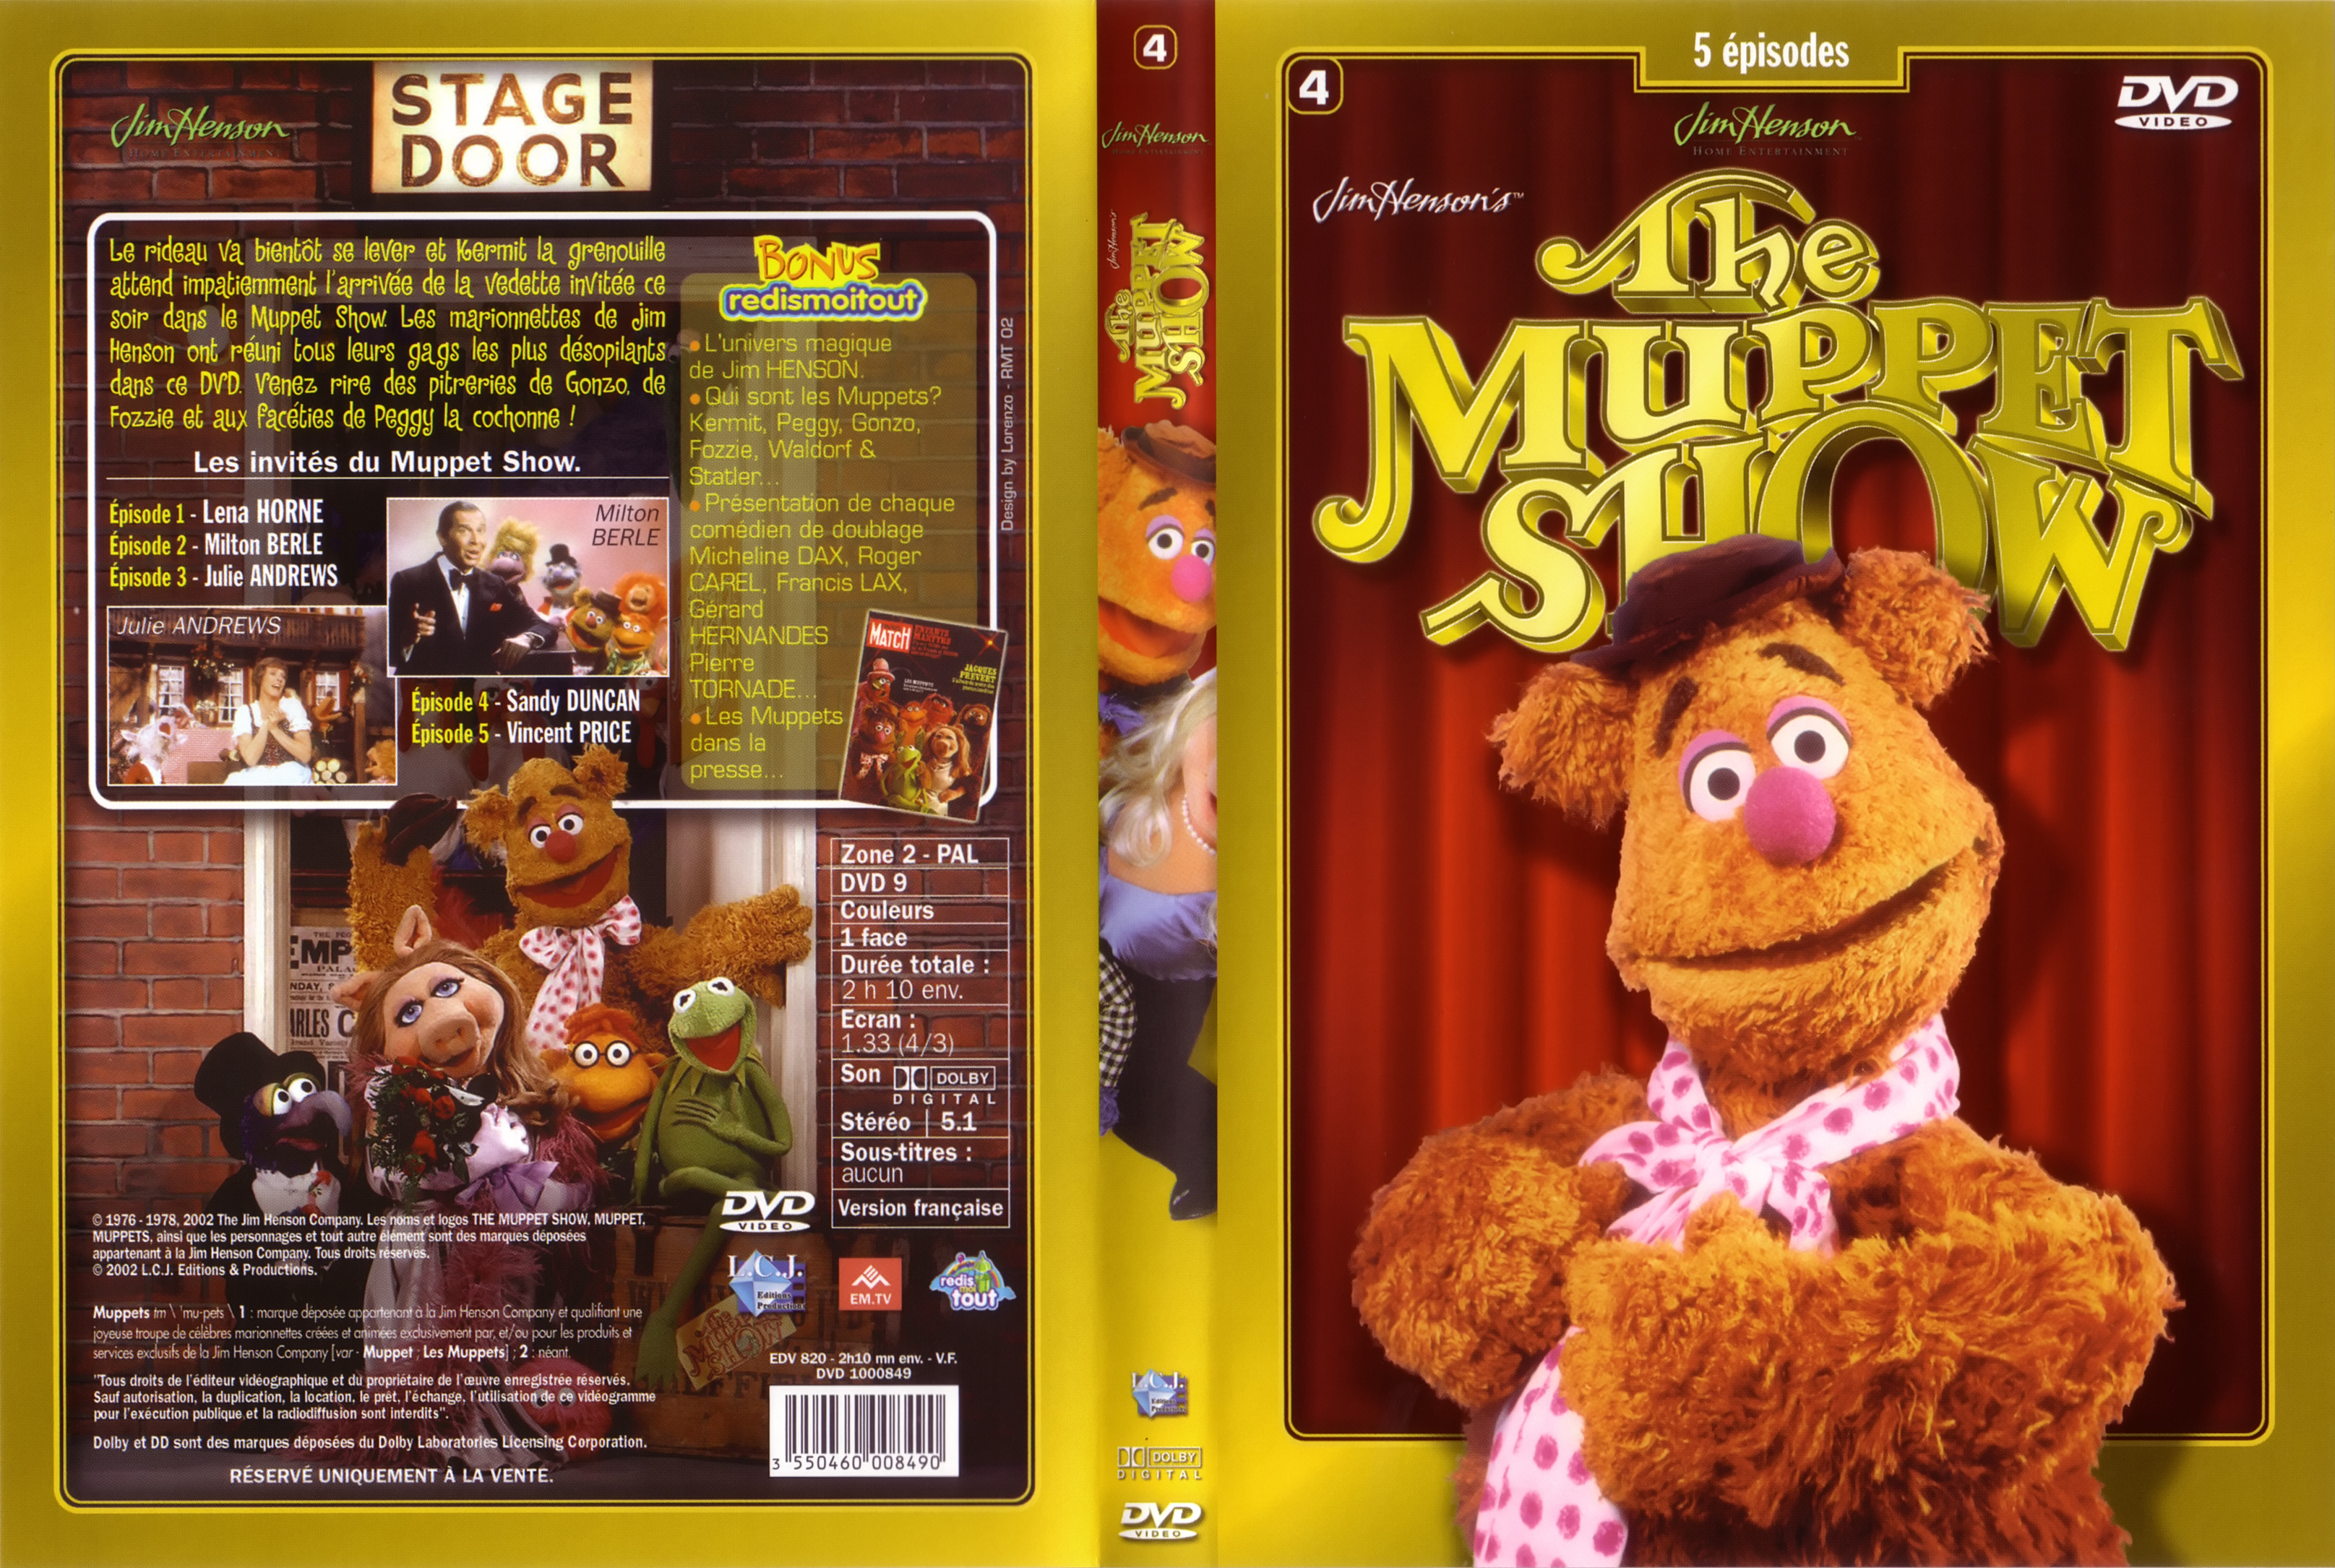 Jaquette DVD The muppet show vol 1 DVD 4